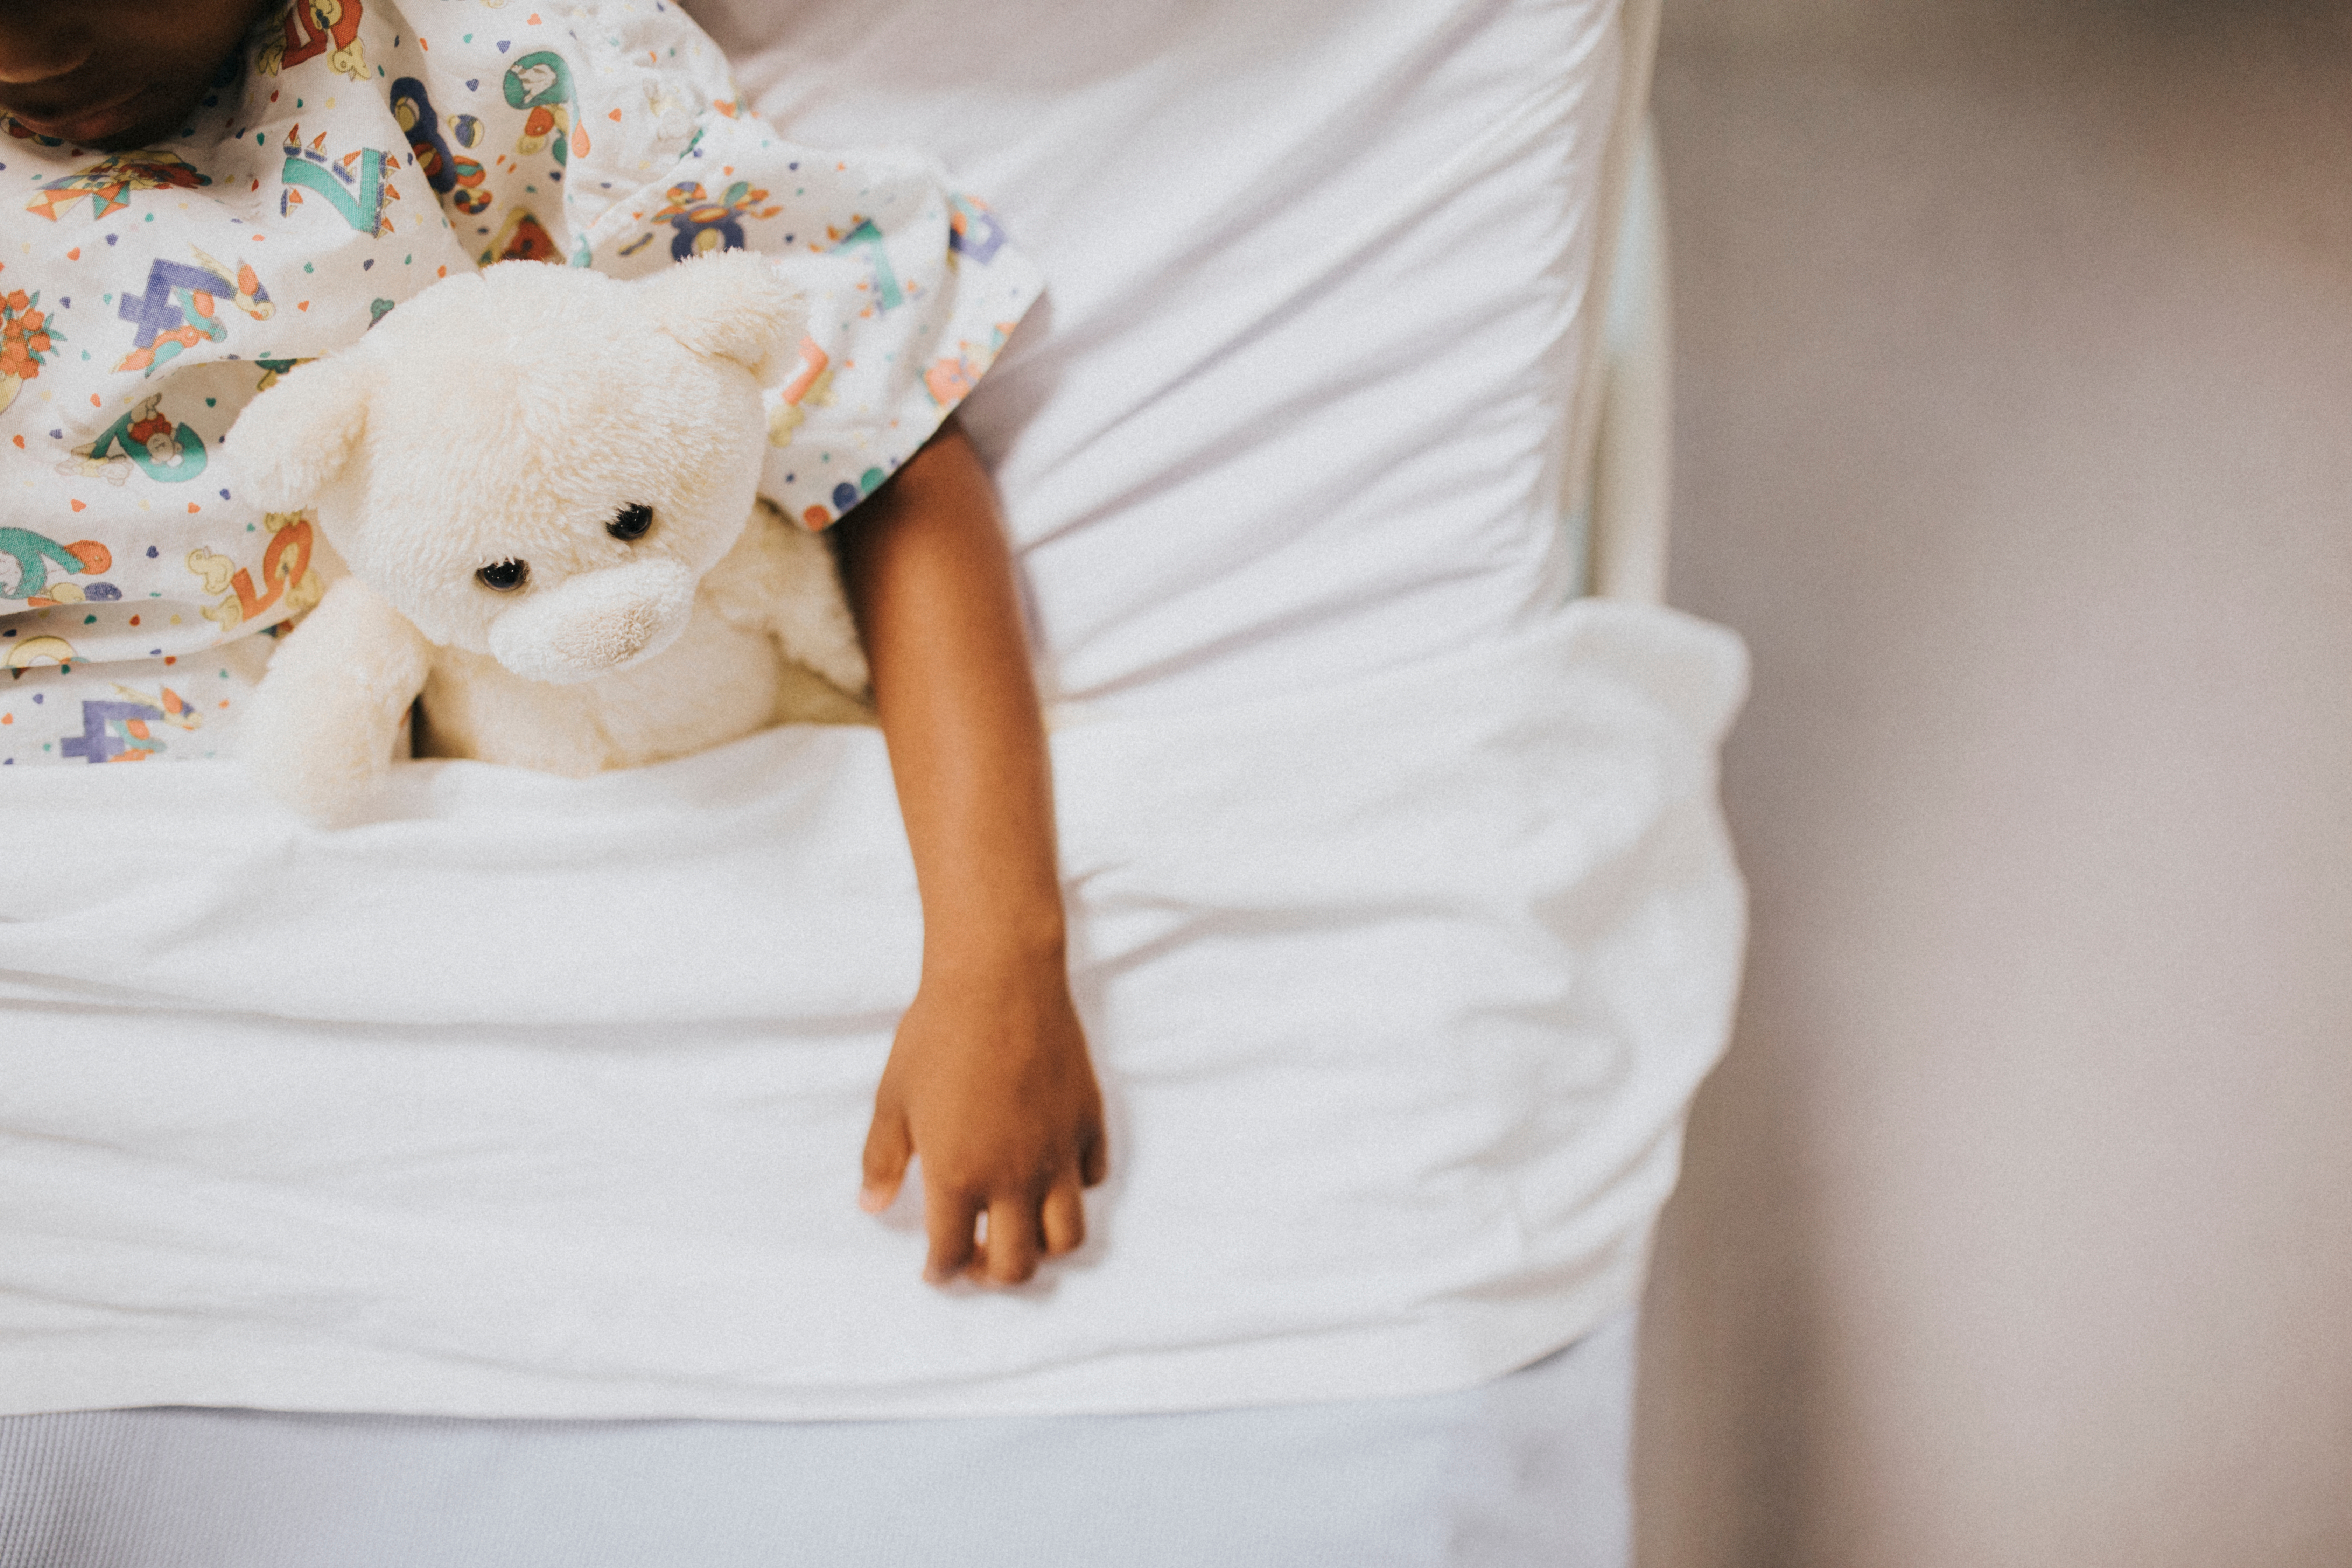 Little girl sleeping in a hospital bed | Source: Shutterstock